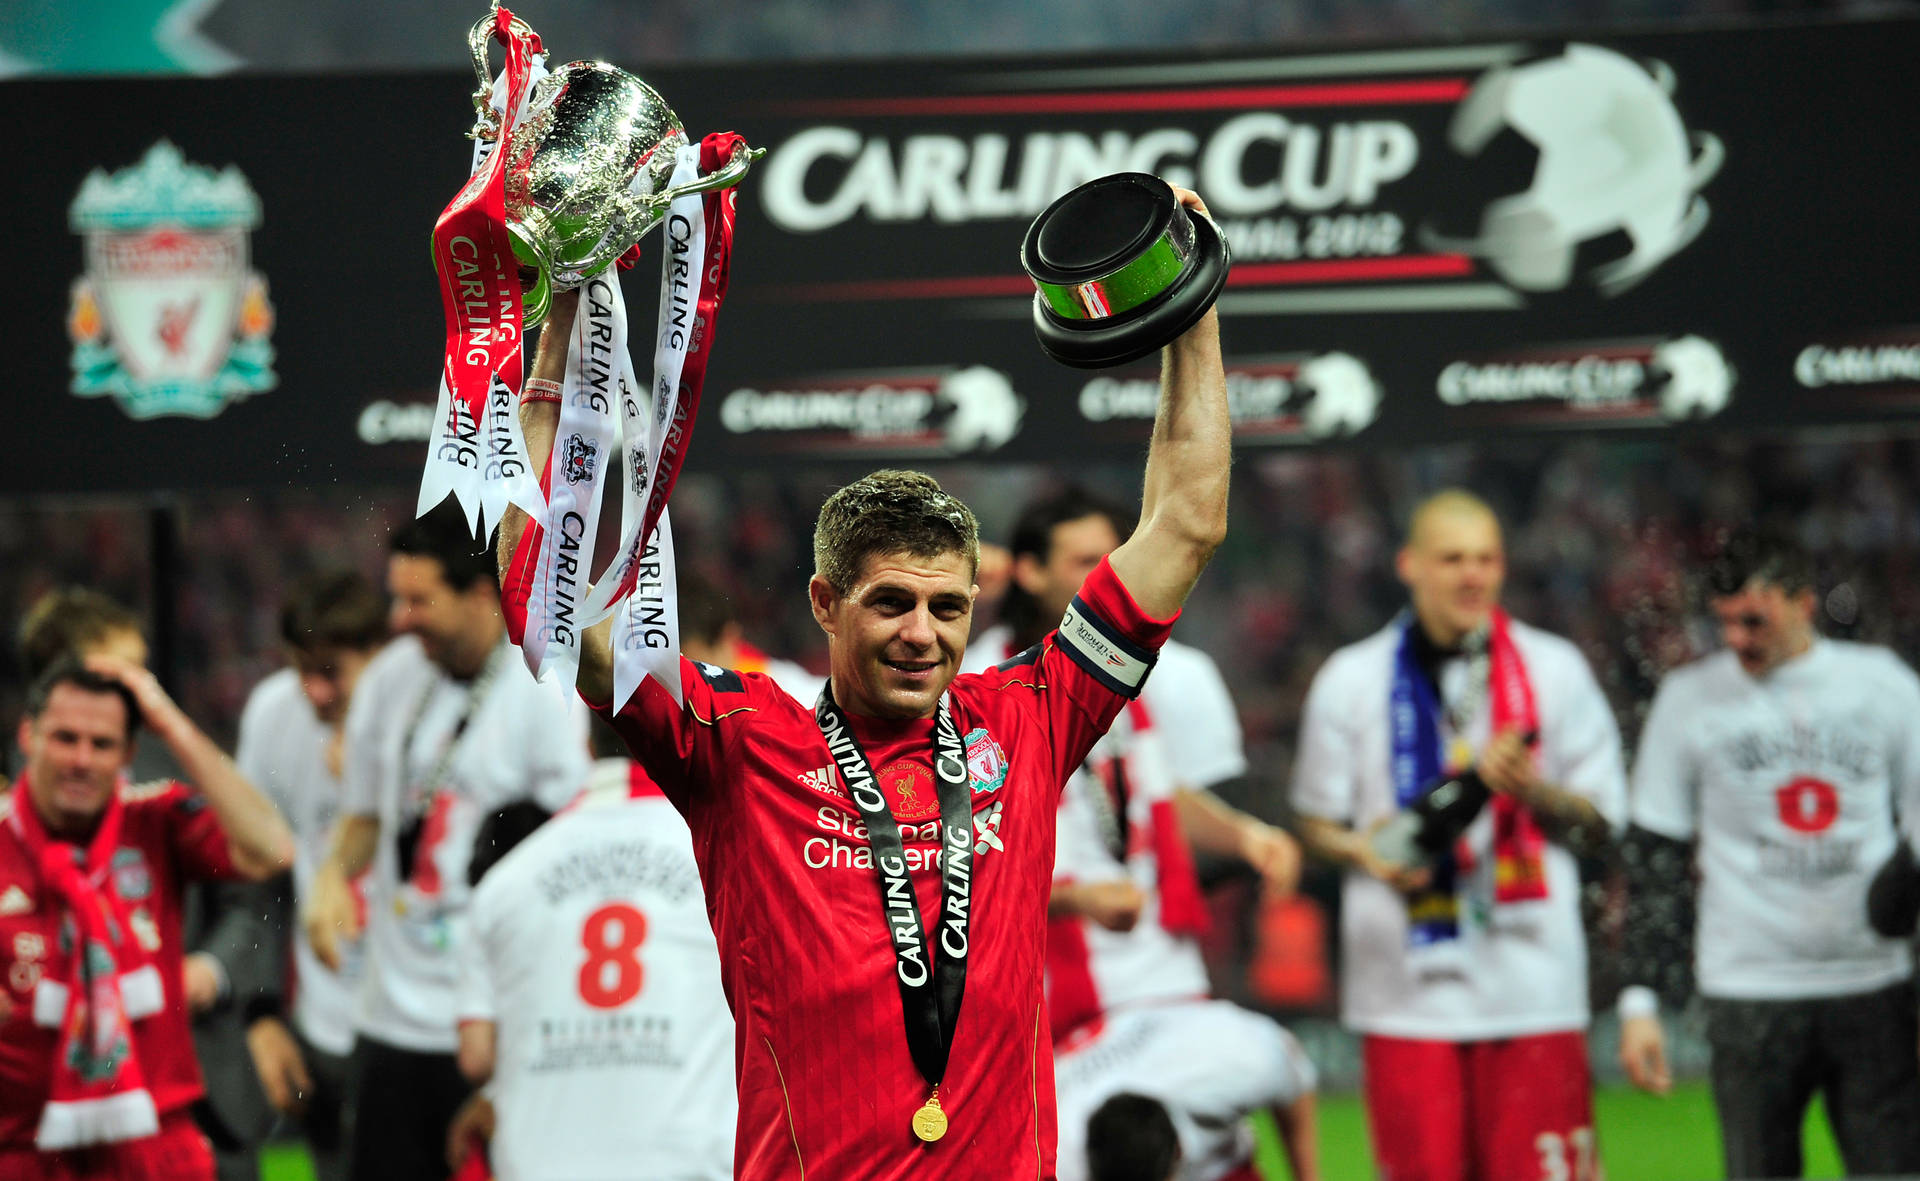 Steven Gerrard Carling Cup 2012 Background